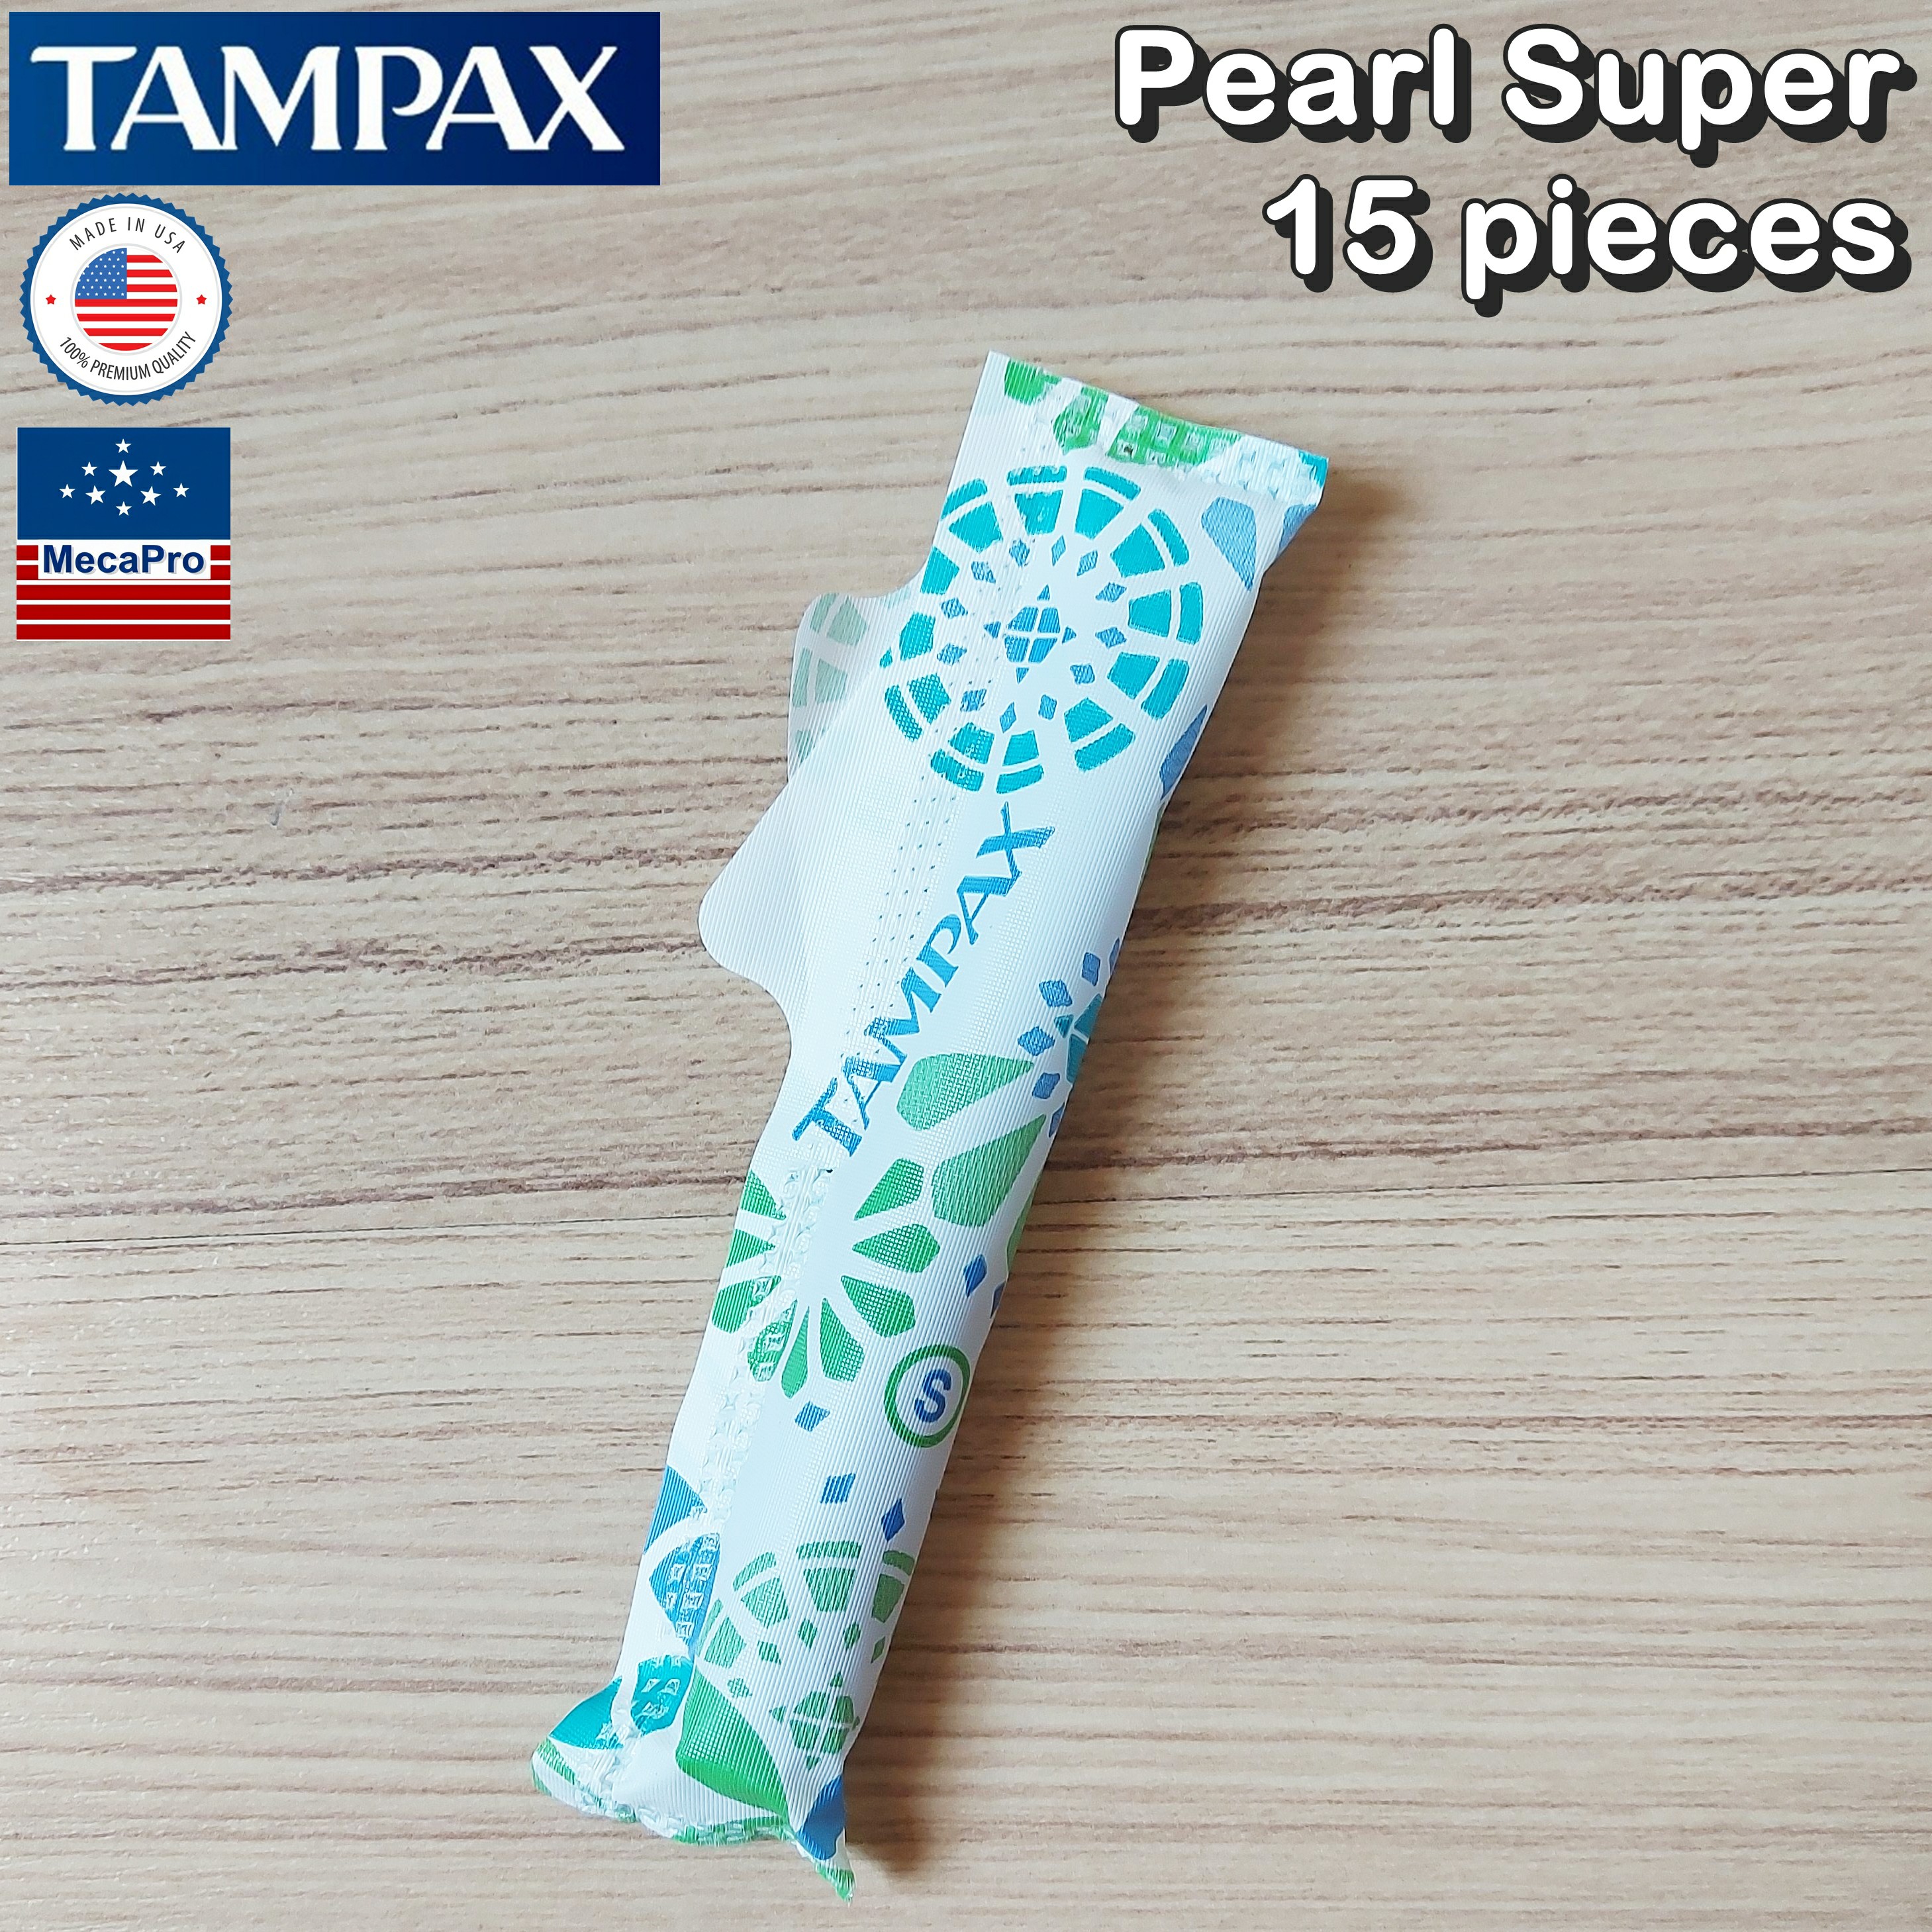 Tampax® Pearl Super Plastic Tampons 15 pieces ผ้าอนามัยแบบสอด 15 ชิ้น เหมาะกับวันมามาก